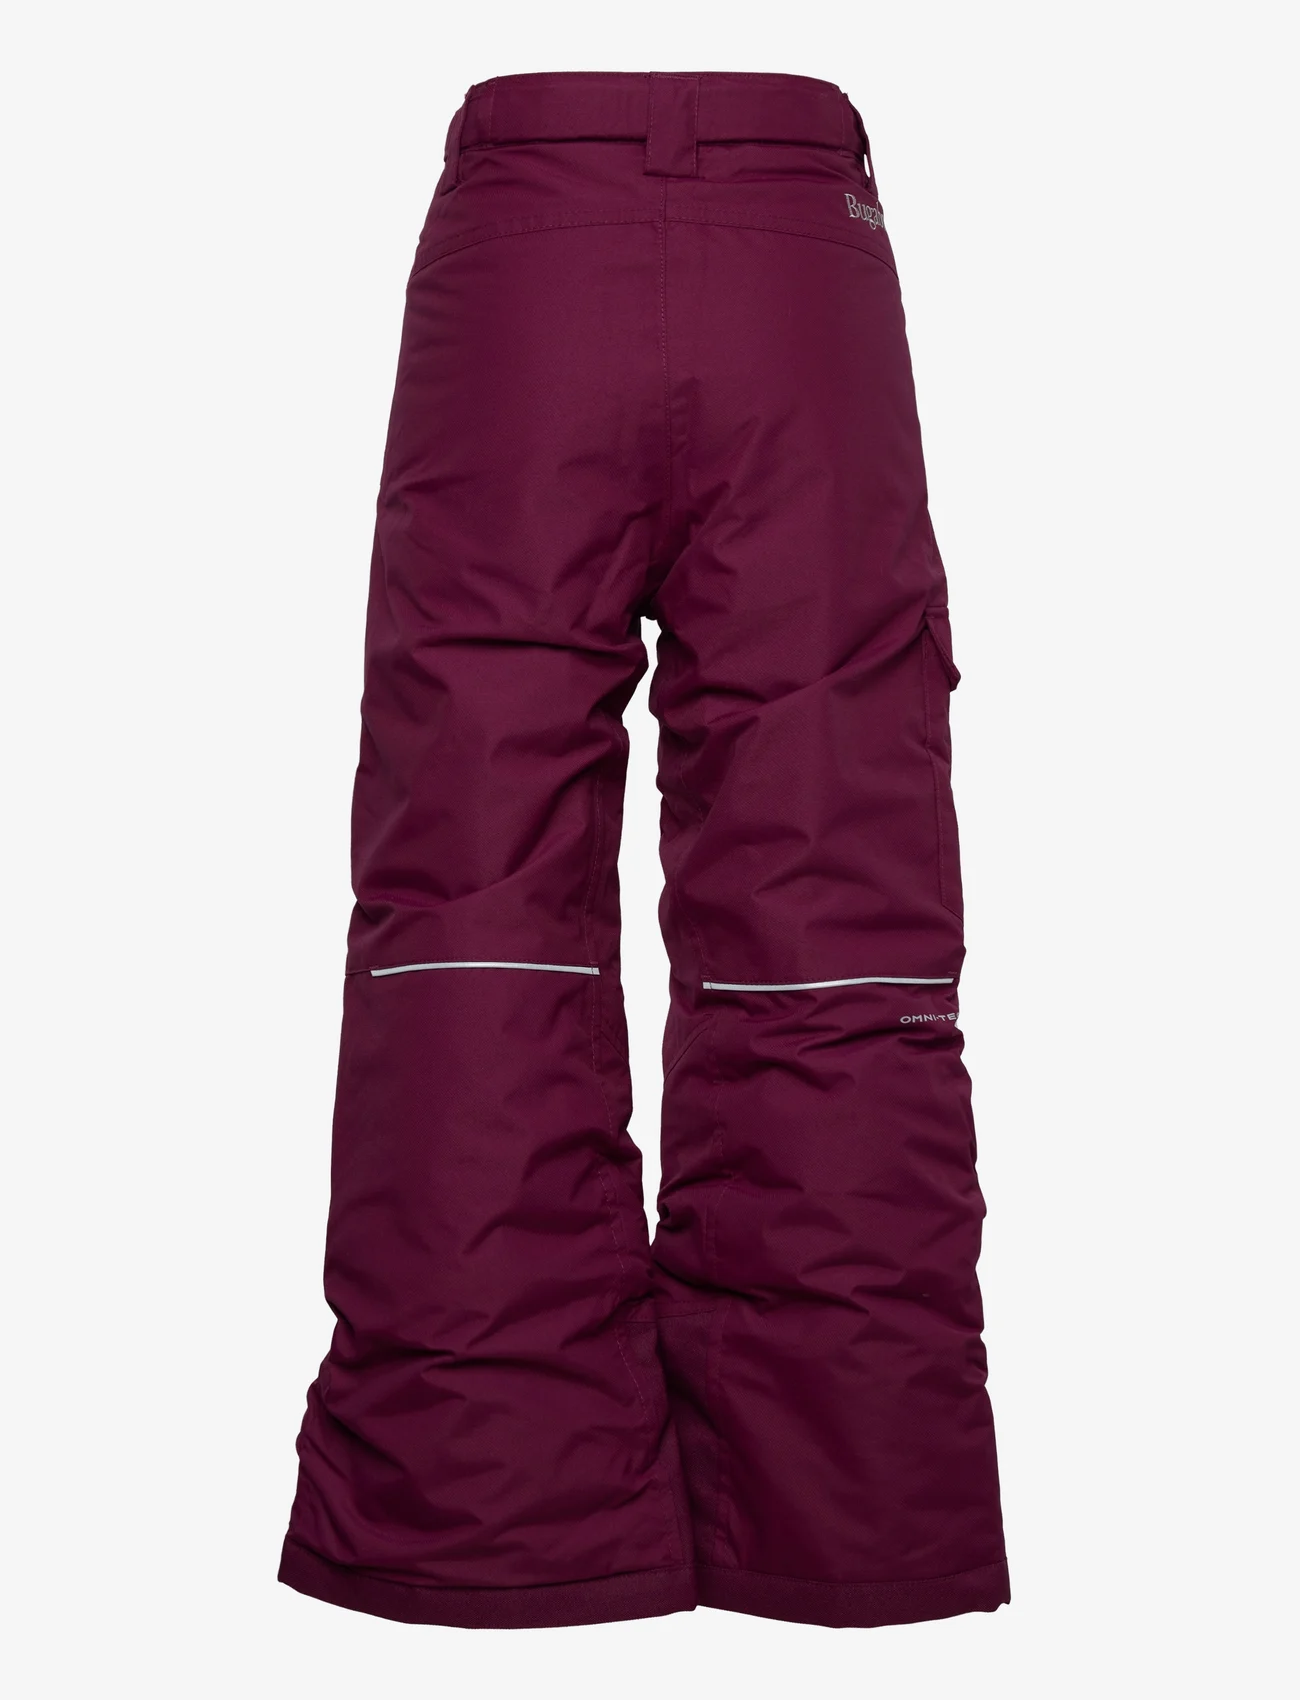 Columbia Sportswear - Bugaboo II Pant - hiihto- & lasketteluhousut - marionberry - 1